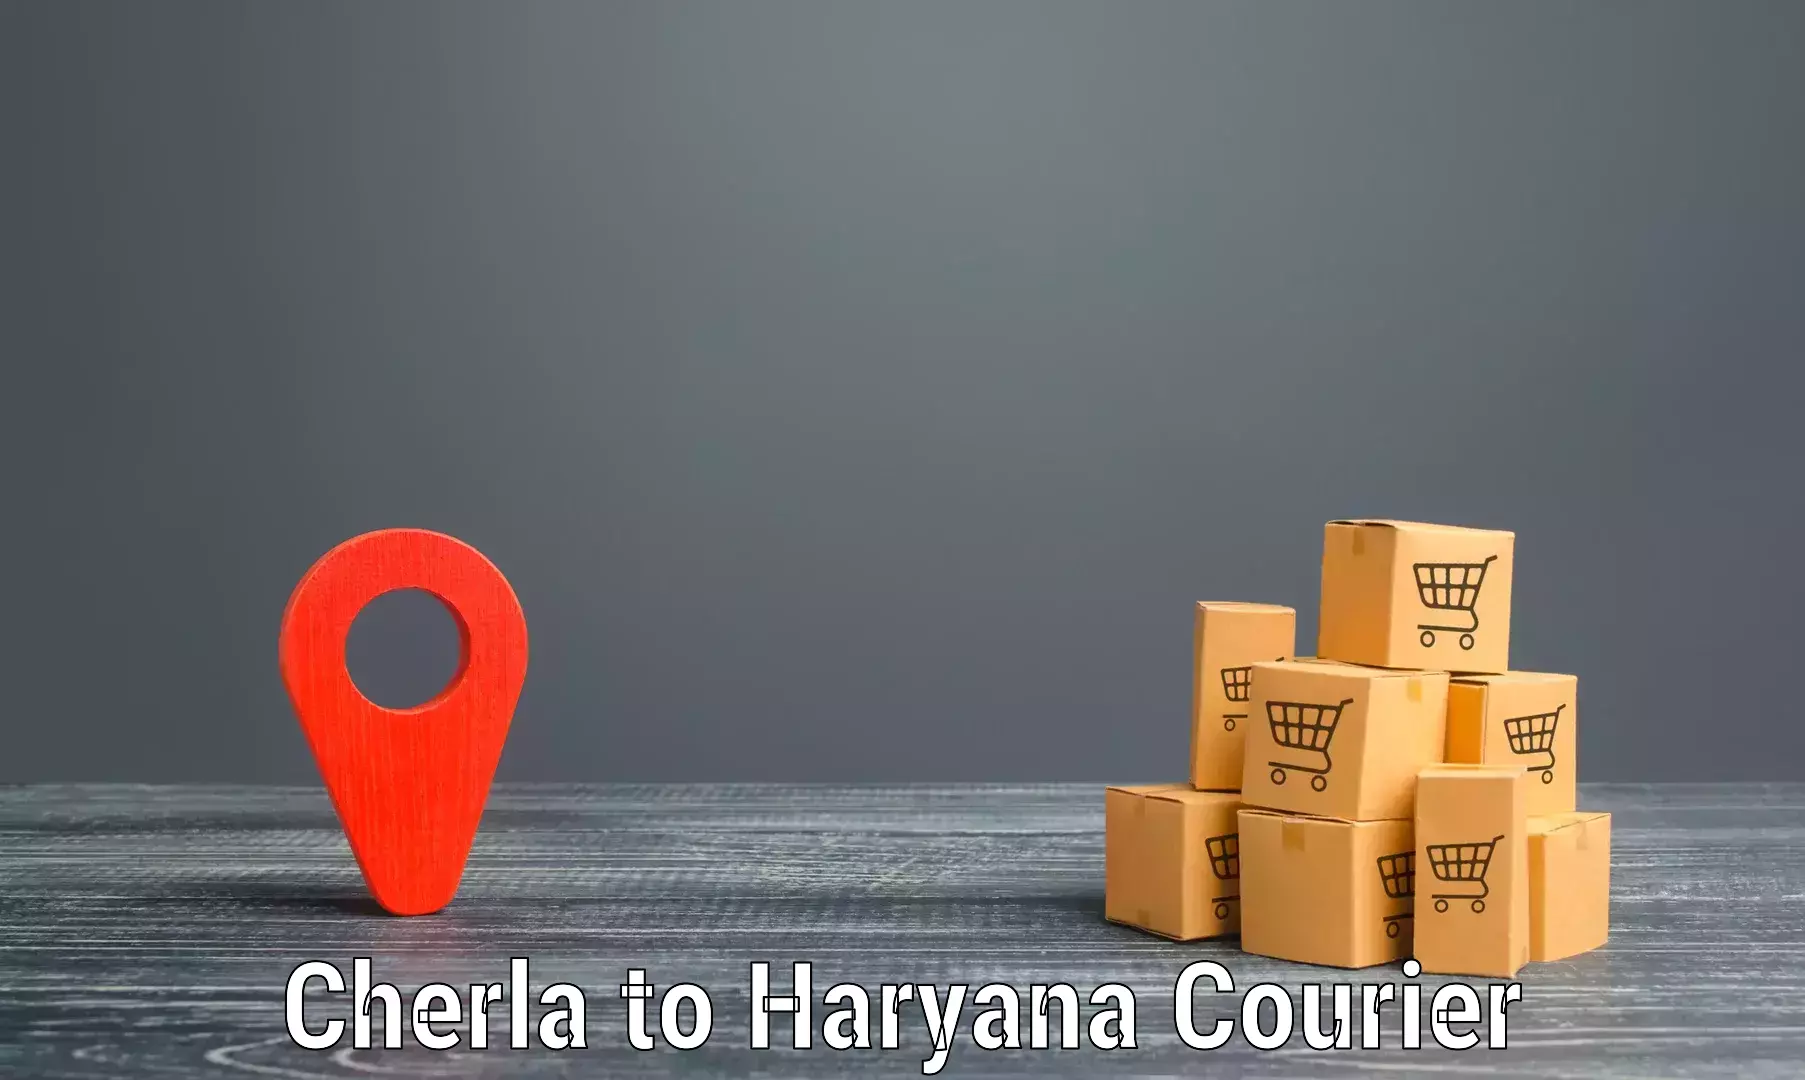 Advanced logistics management Cherla to Chirya